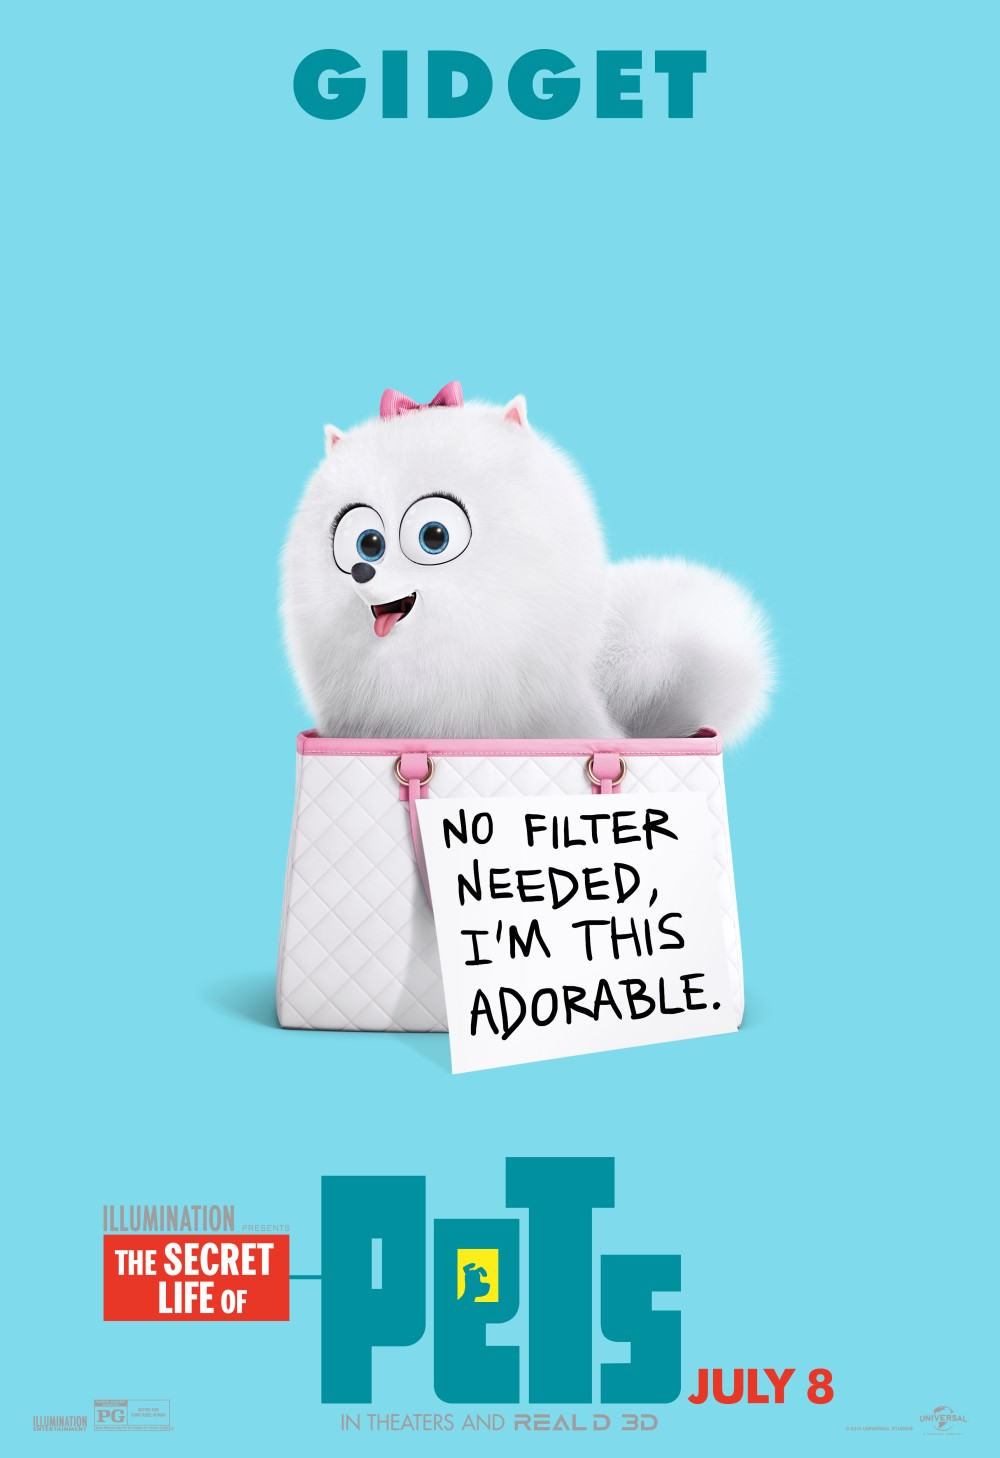 the-secret-life-of-pets-poster-gidget